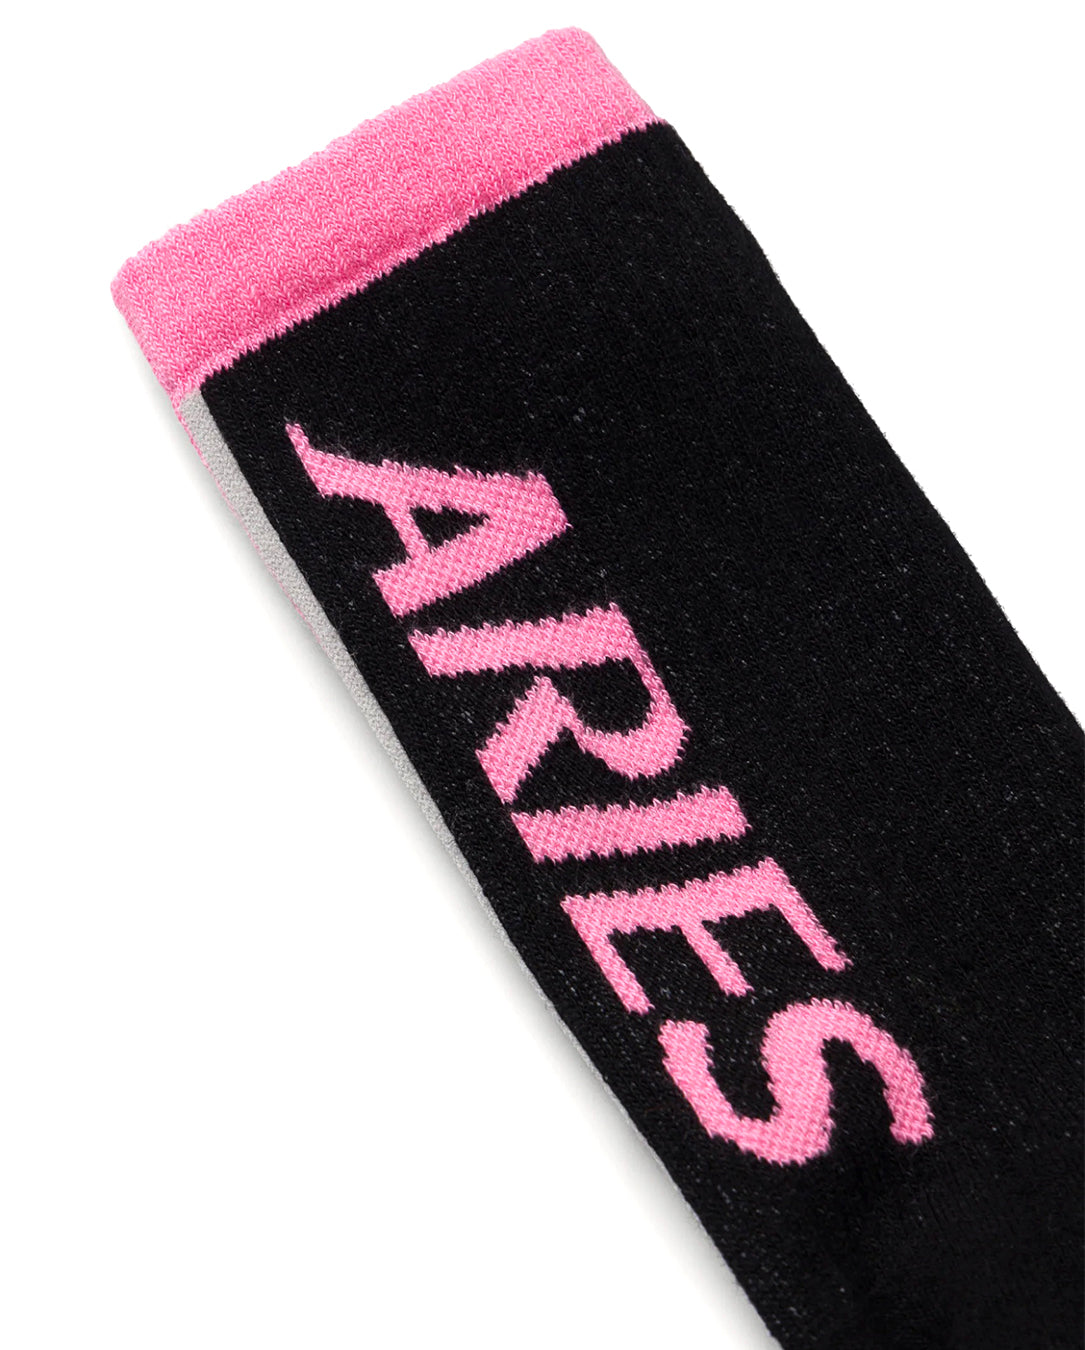 Credit Card Socks pink